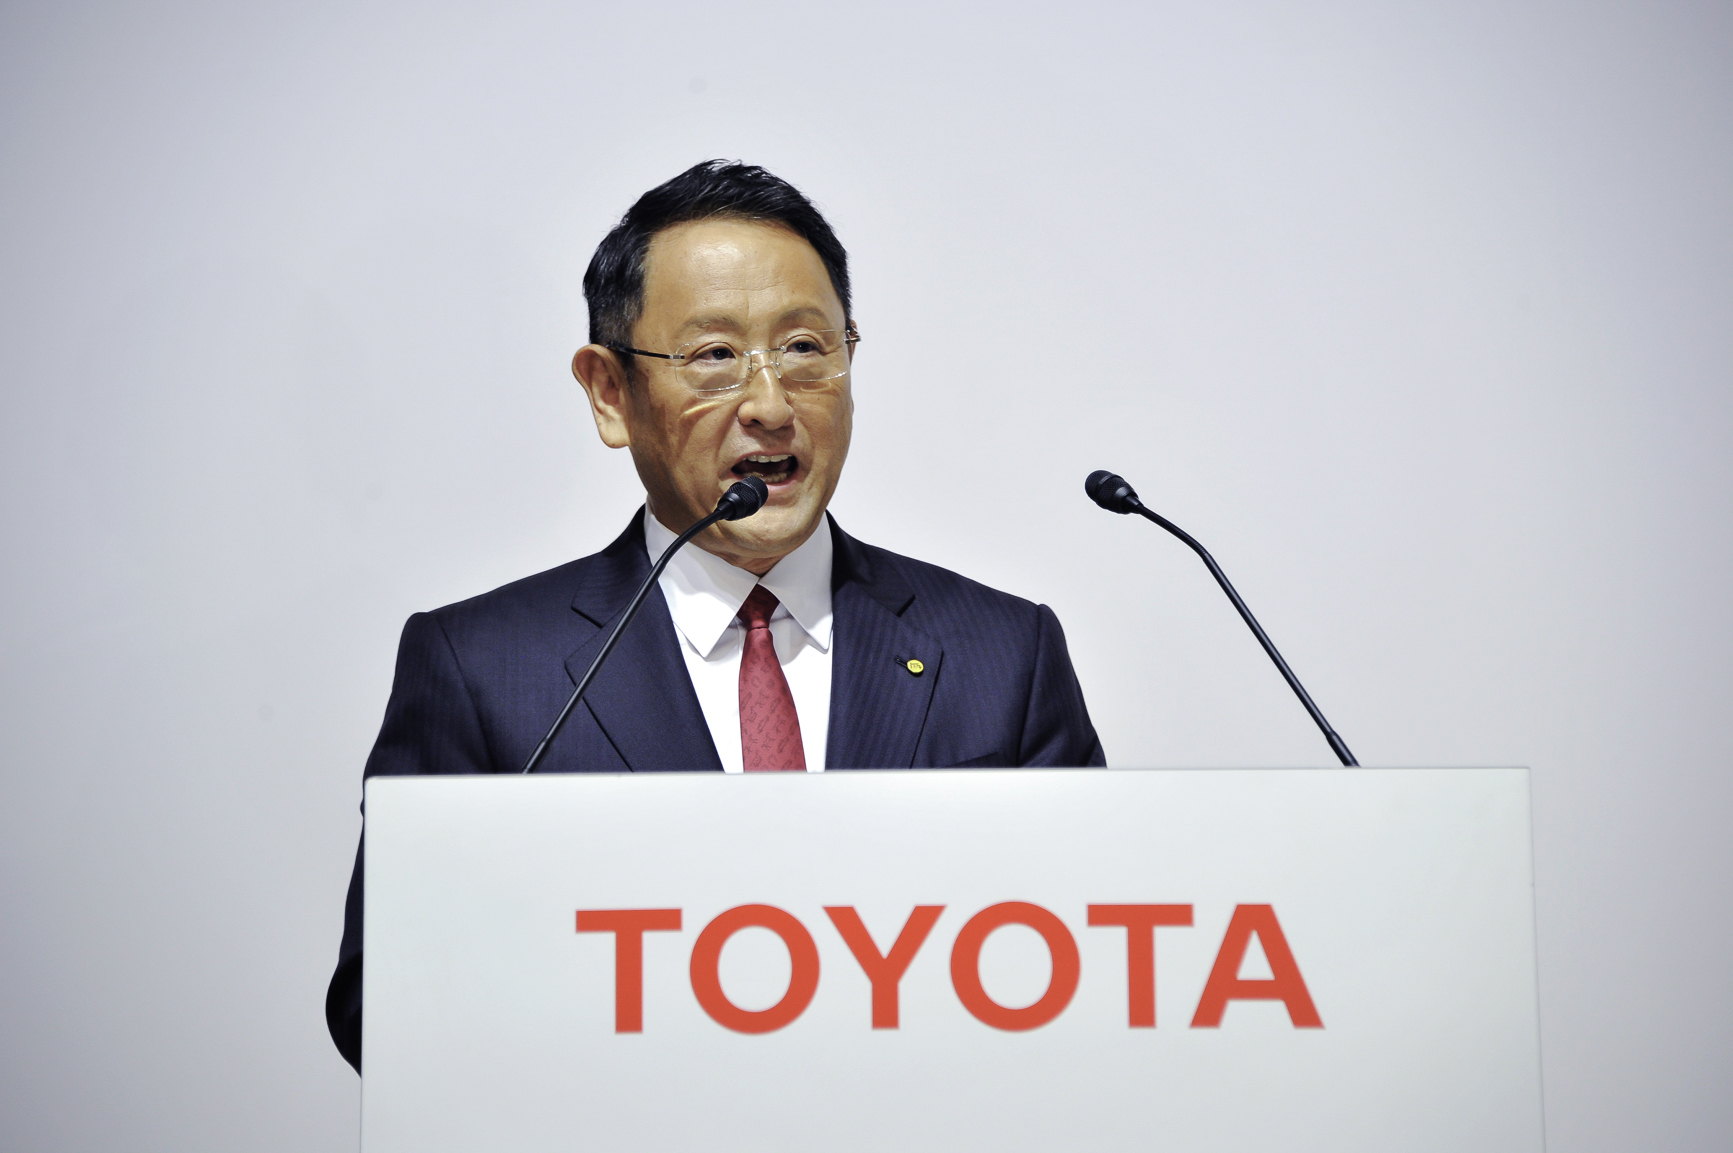 Toyota President and CEO Akio Toyoda